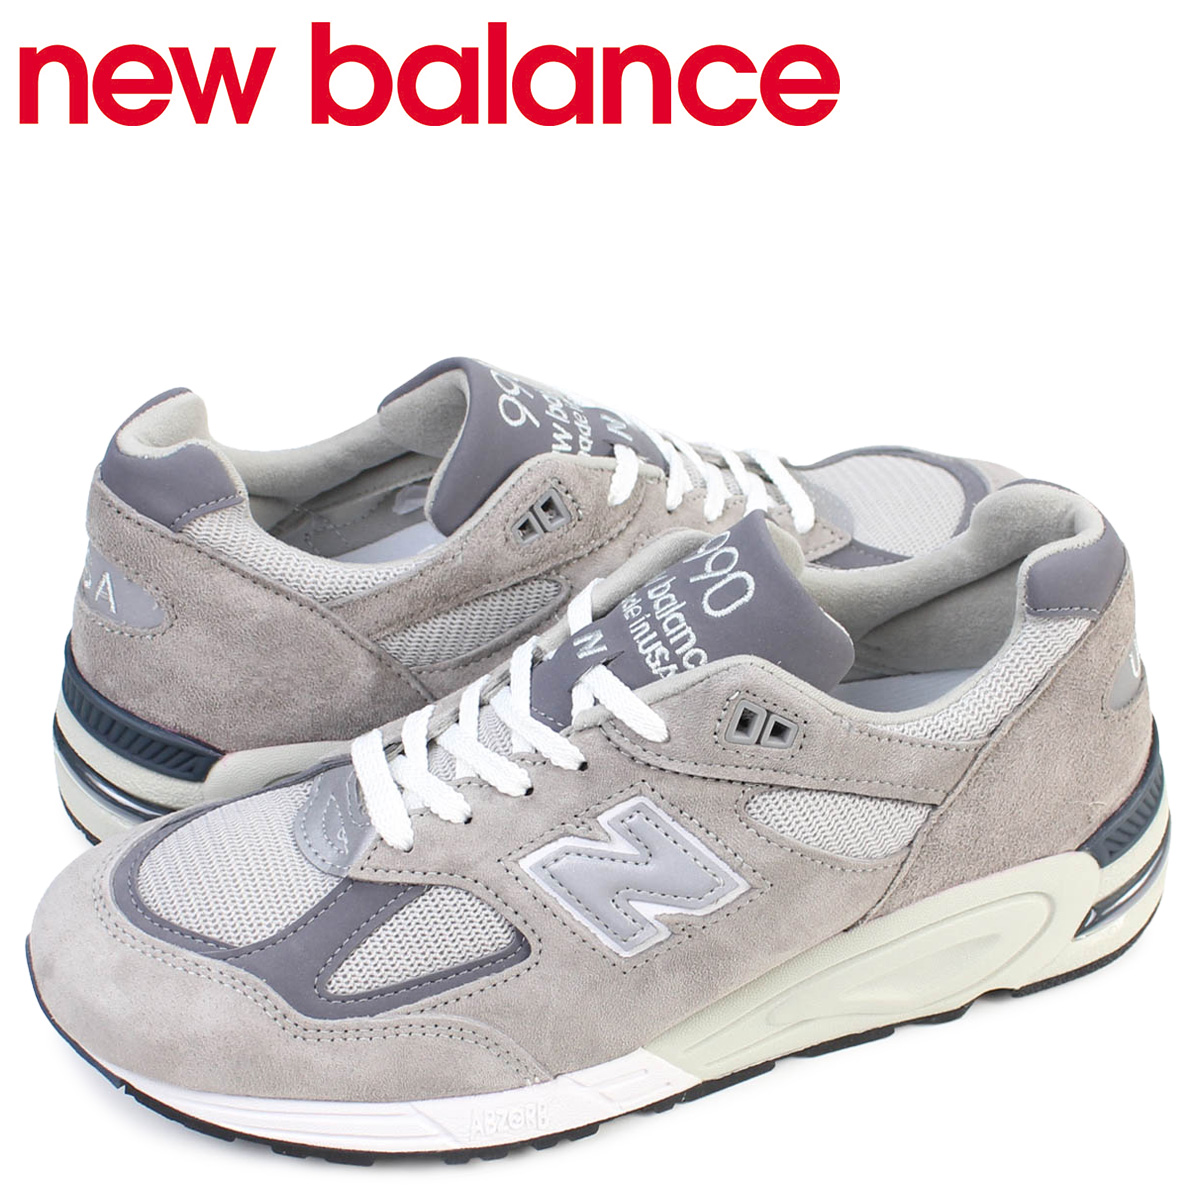 new balance 990 grey